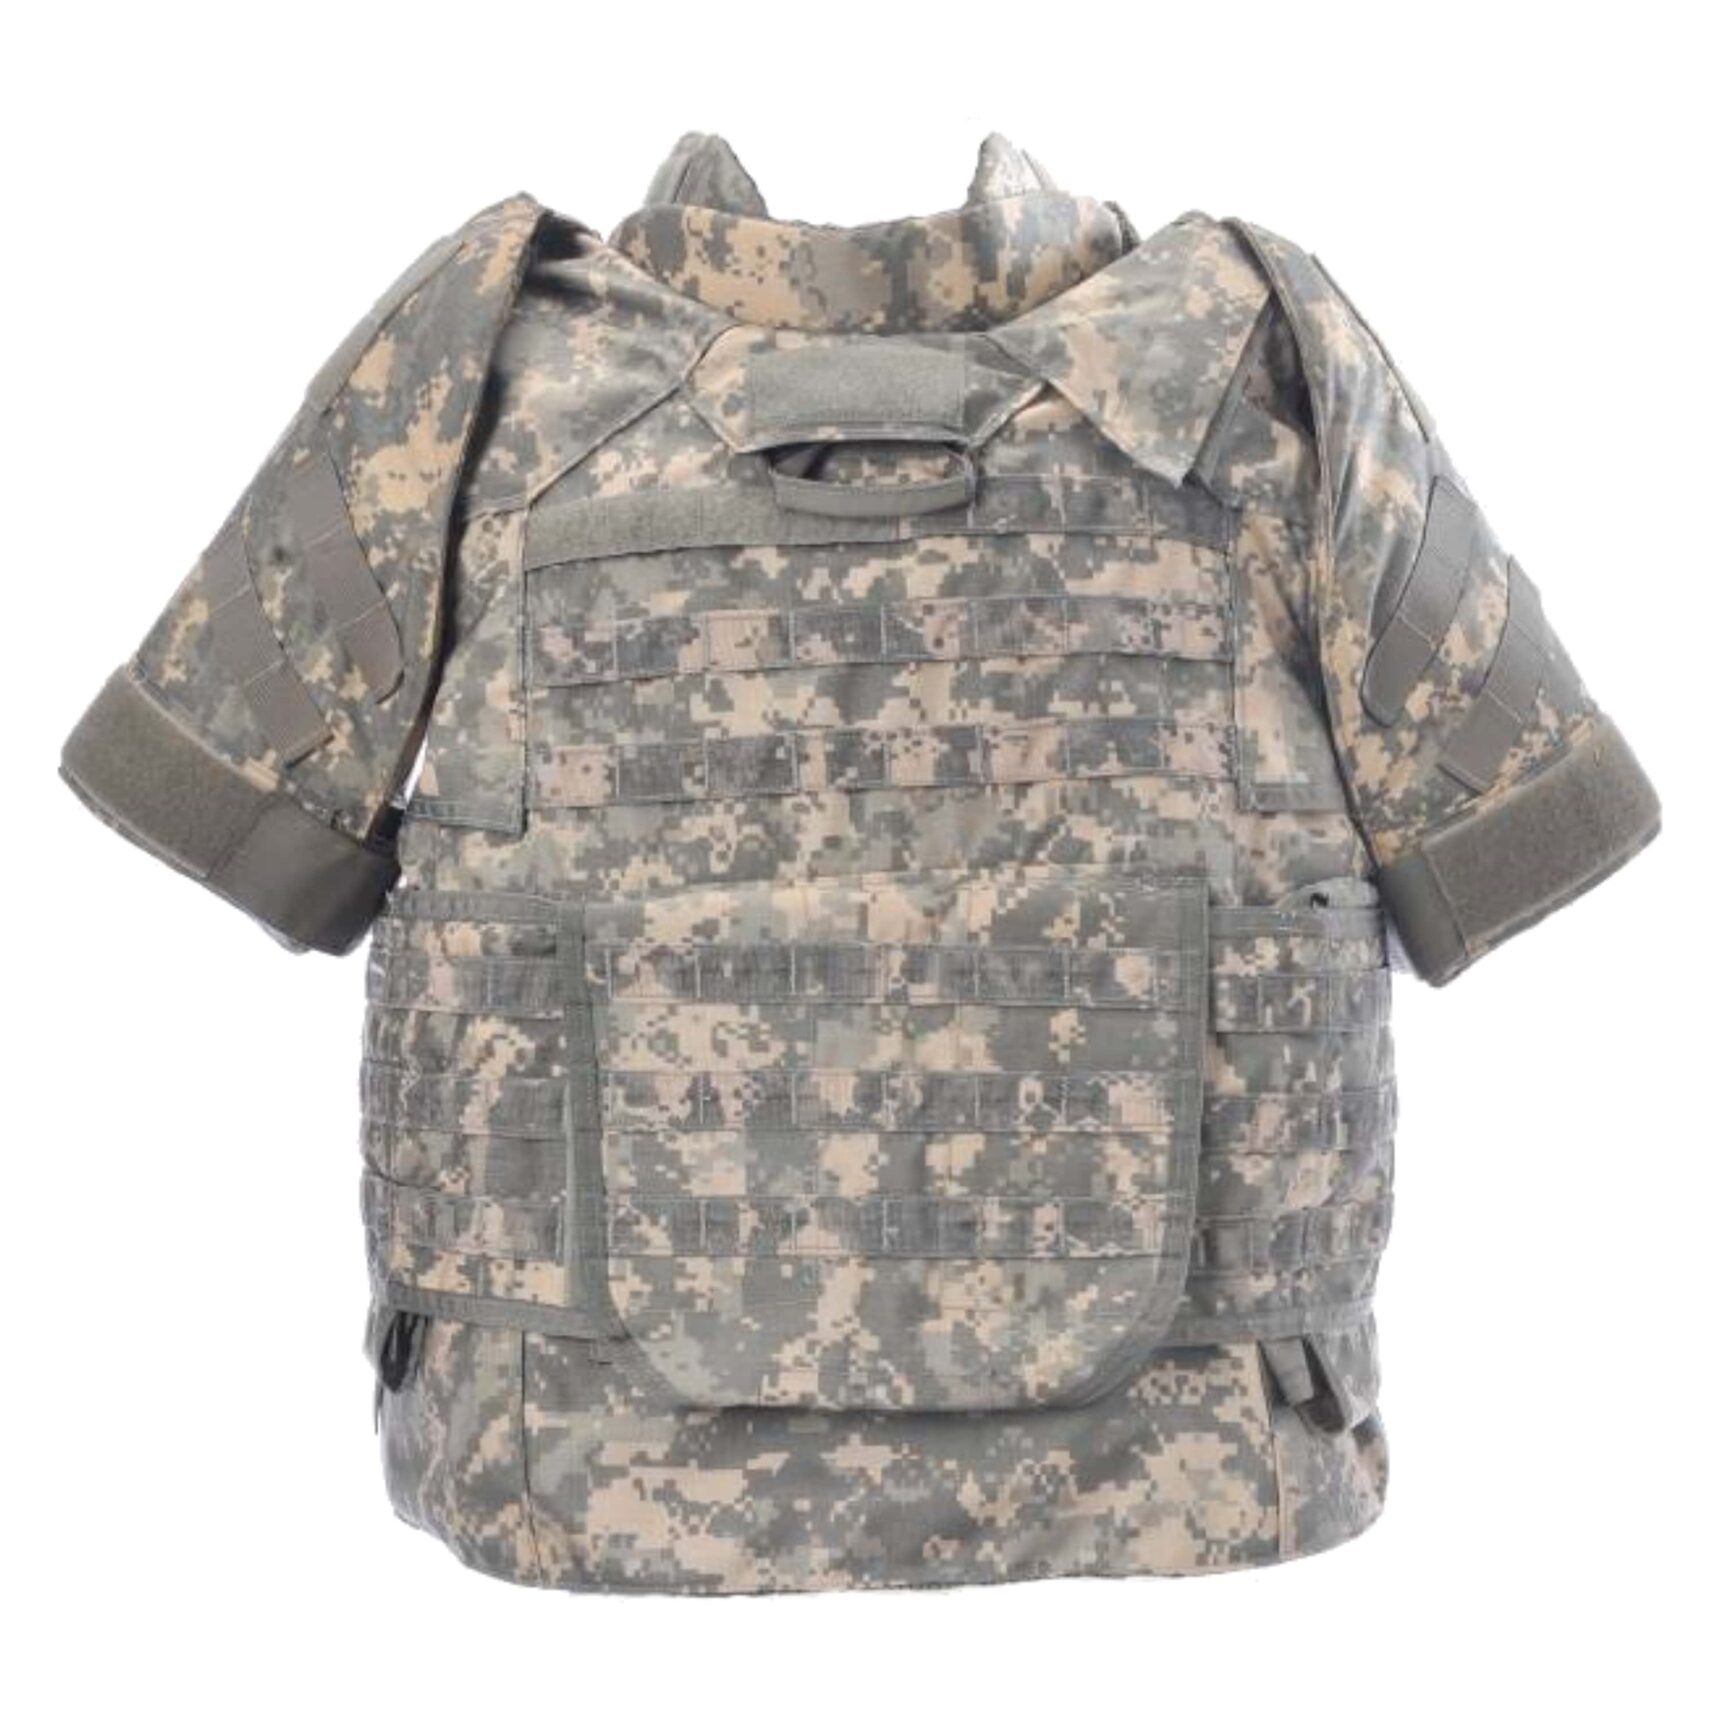 IOTV Gen Бронежилет США плитоноска Америка ACU UCP Improved Outer Tactical Vest